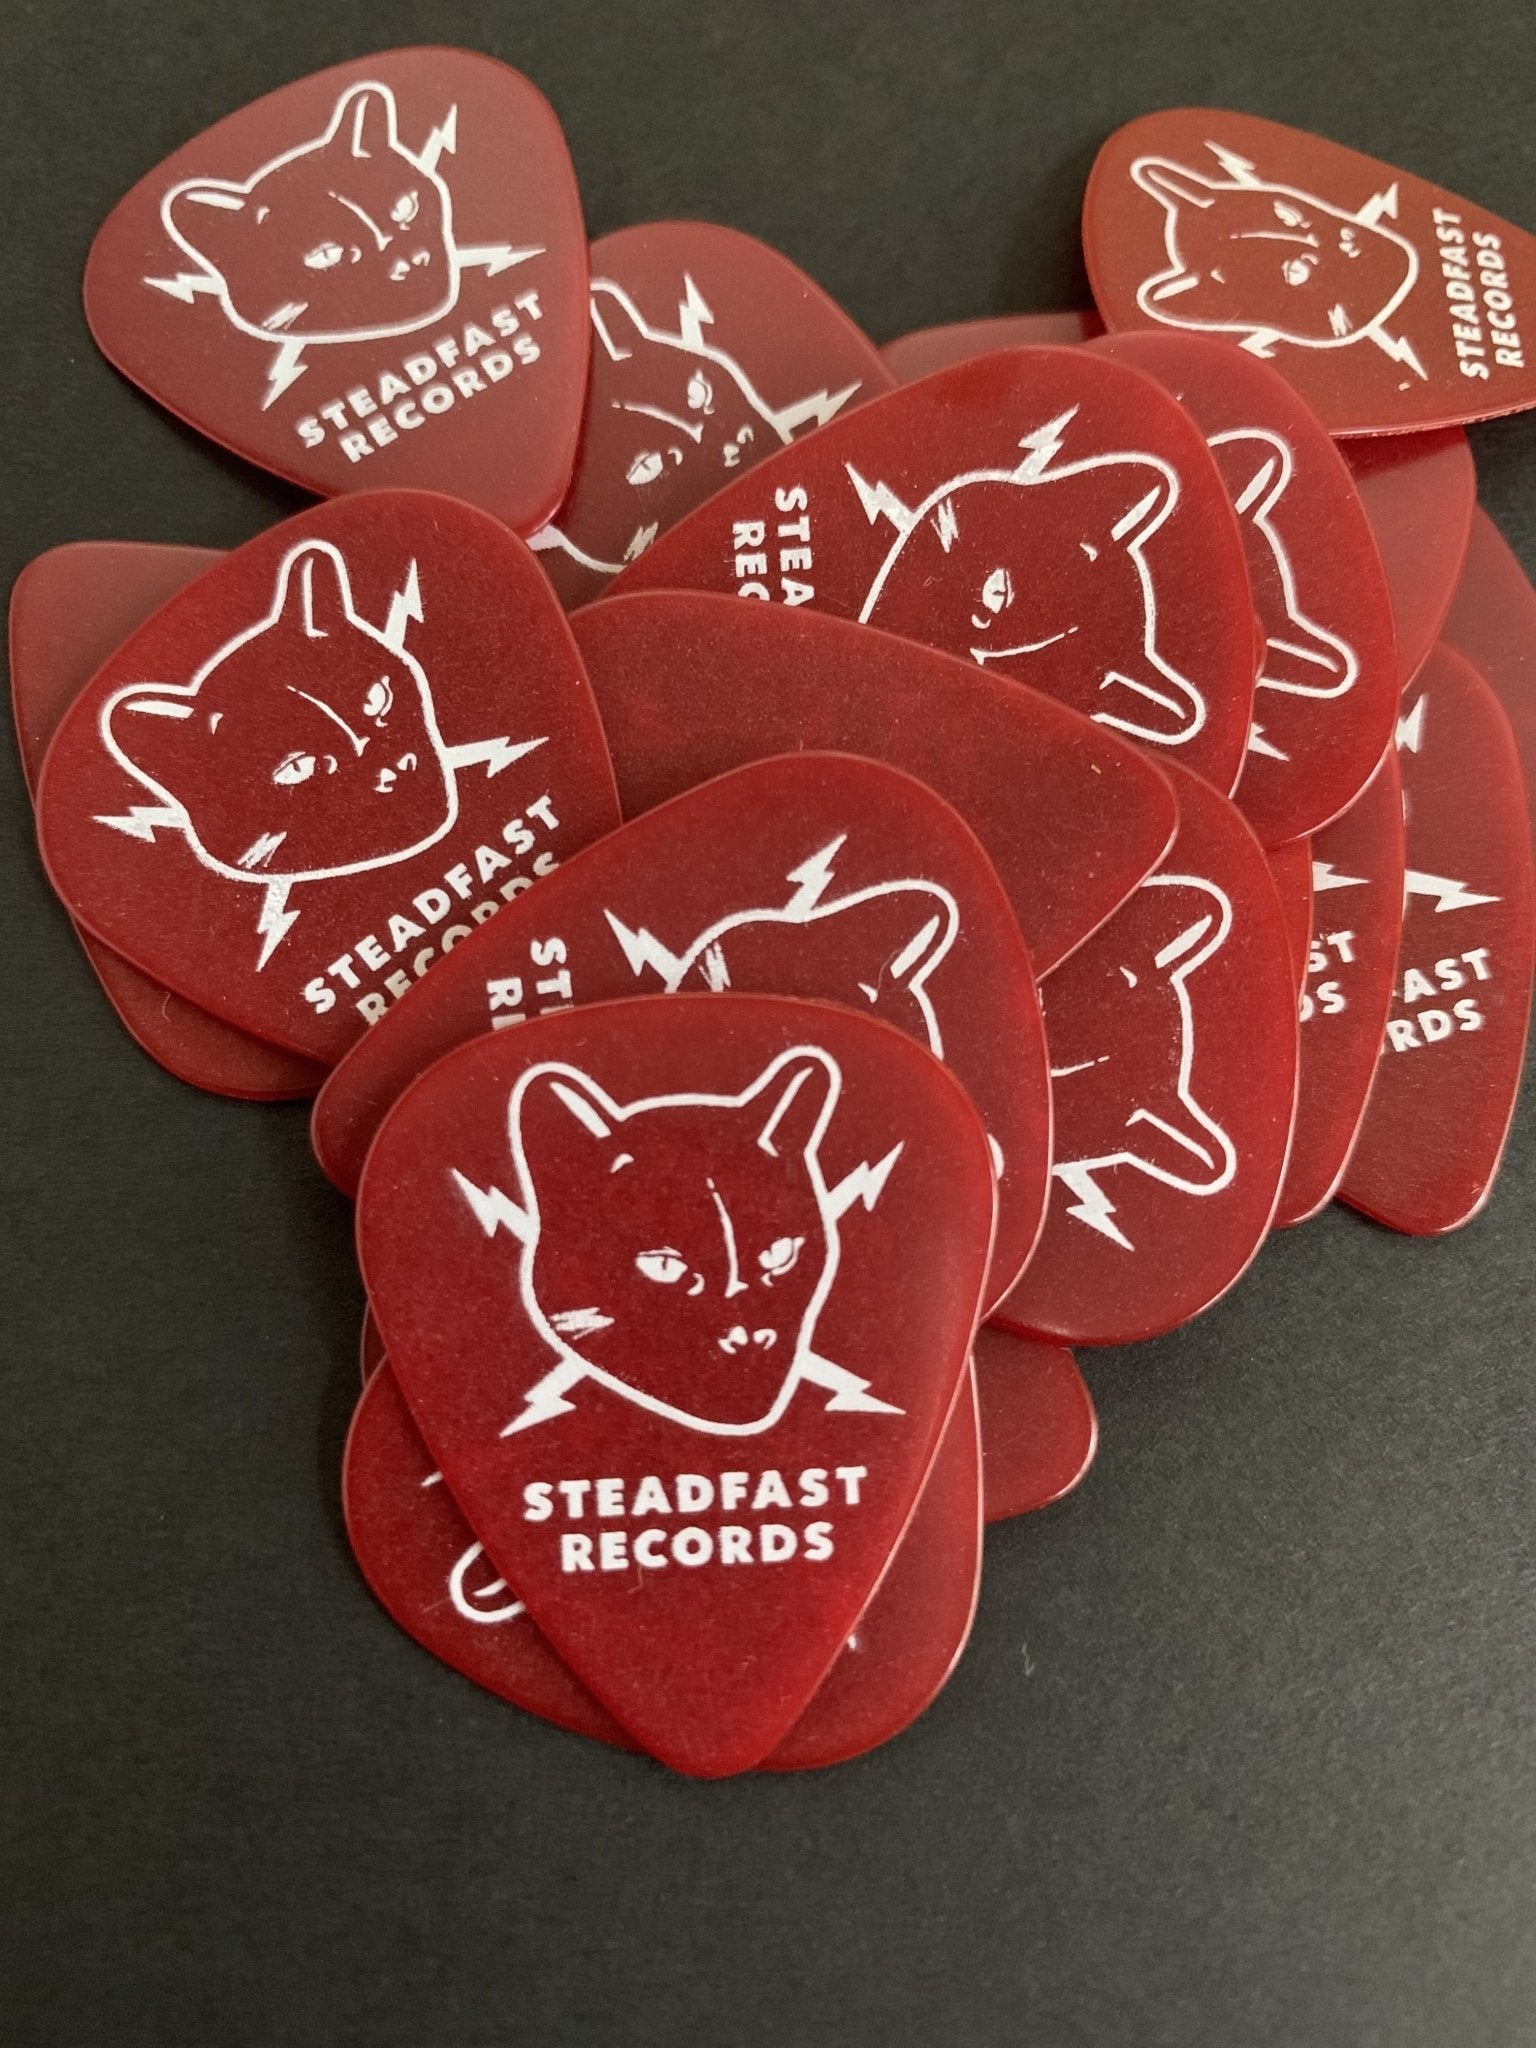 Steadfast Records Guitar Picks 4 pack - Steadfast Records